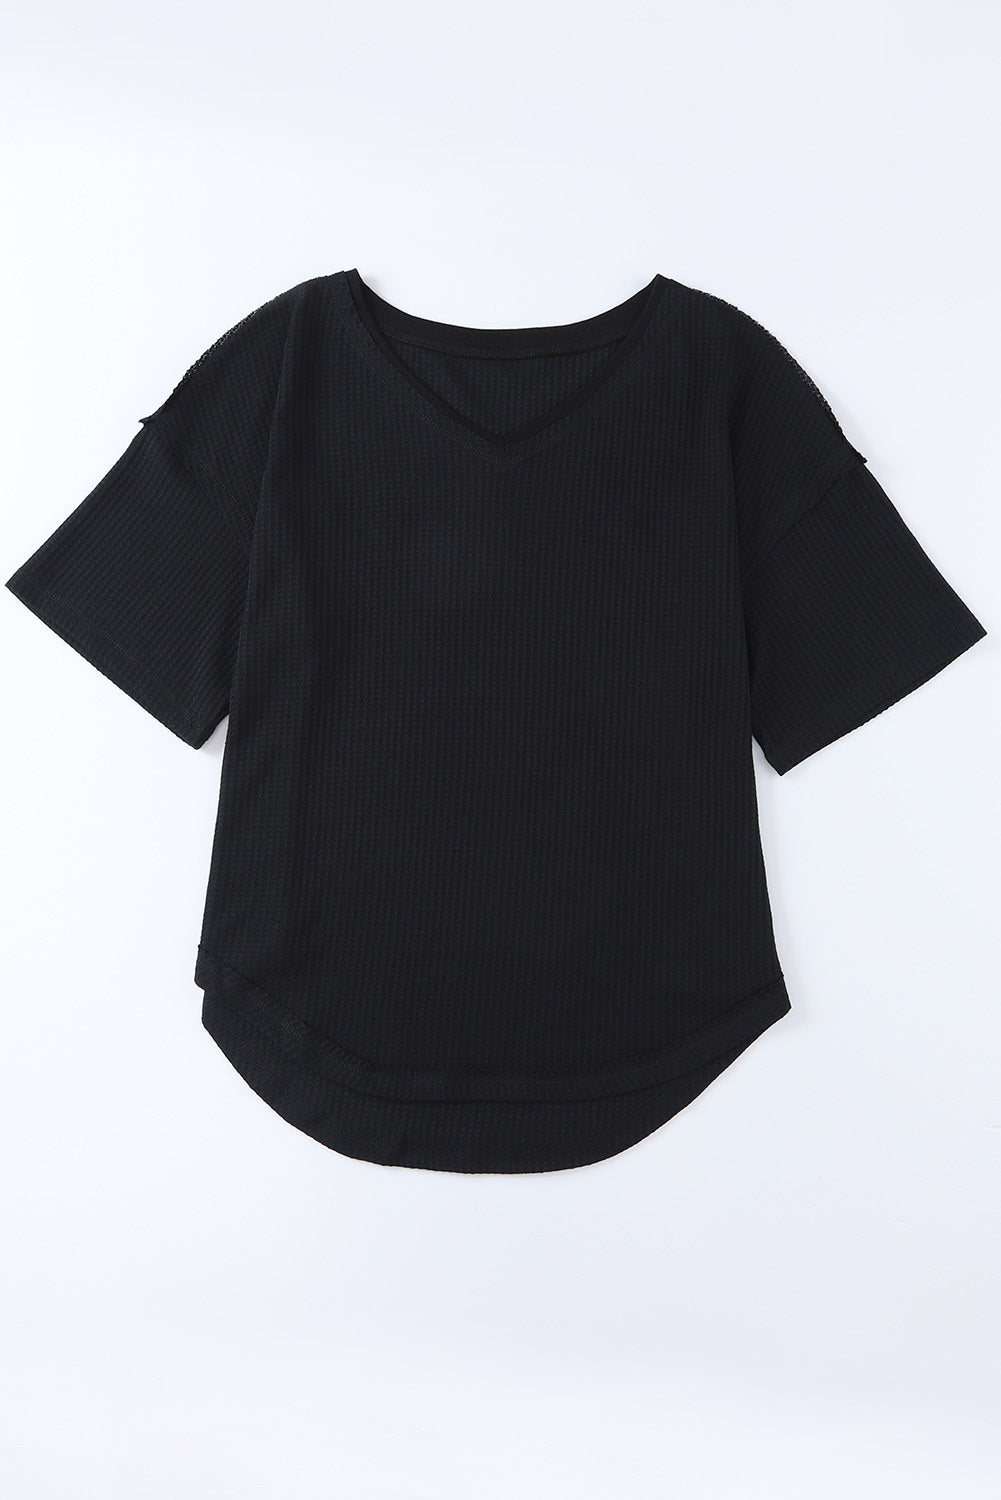 Waffle-Knit V-Neck Dropped Shoulder Blouse - Babbazon blouse